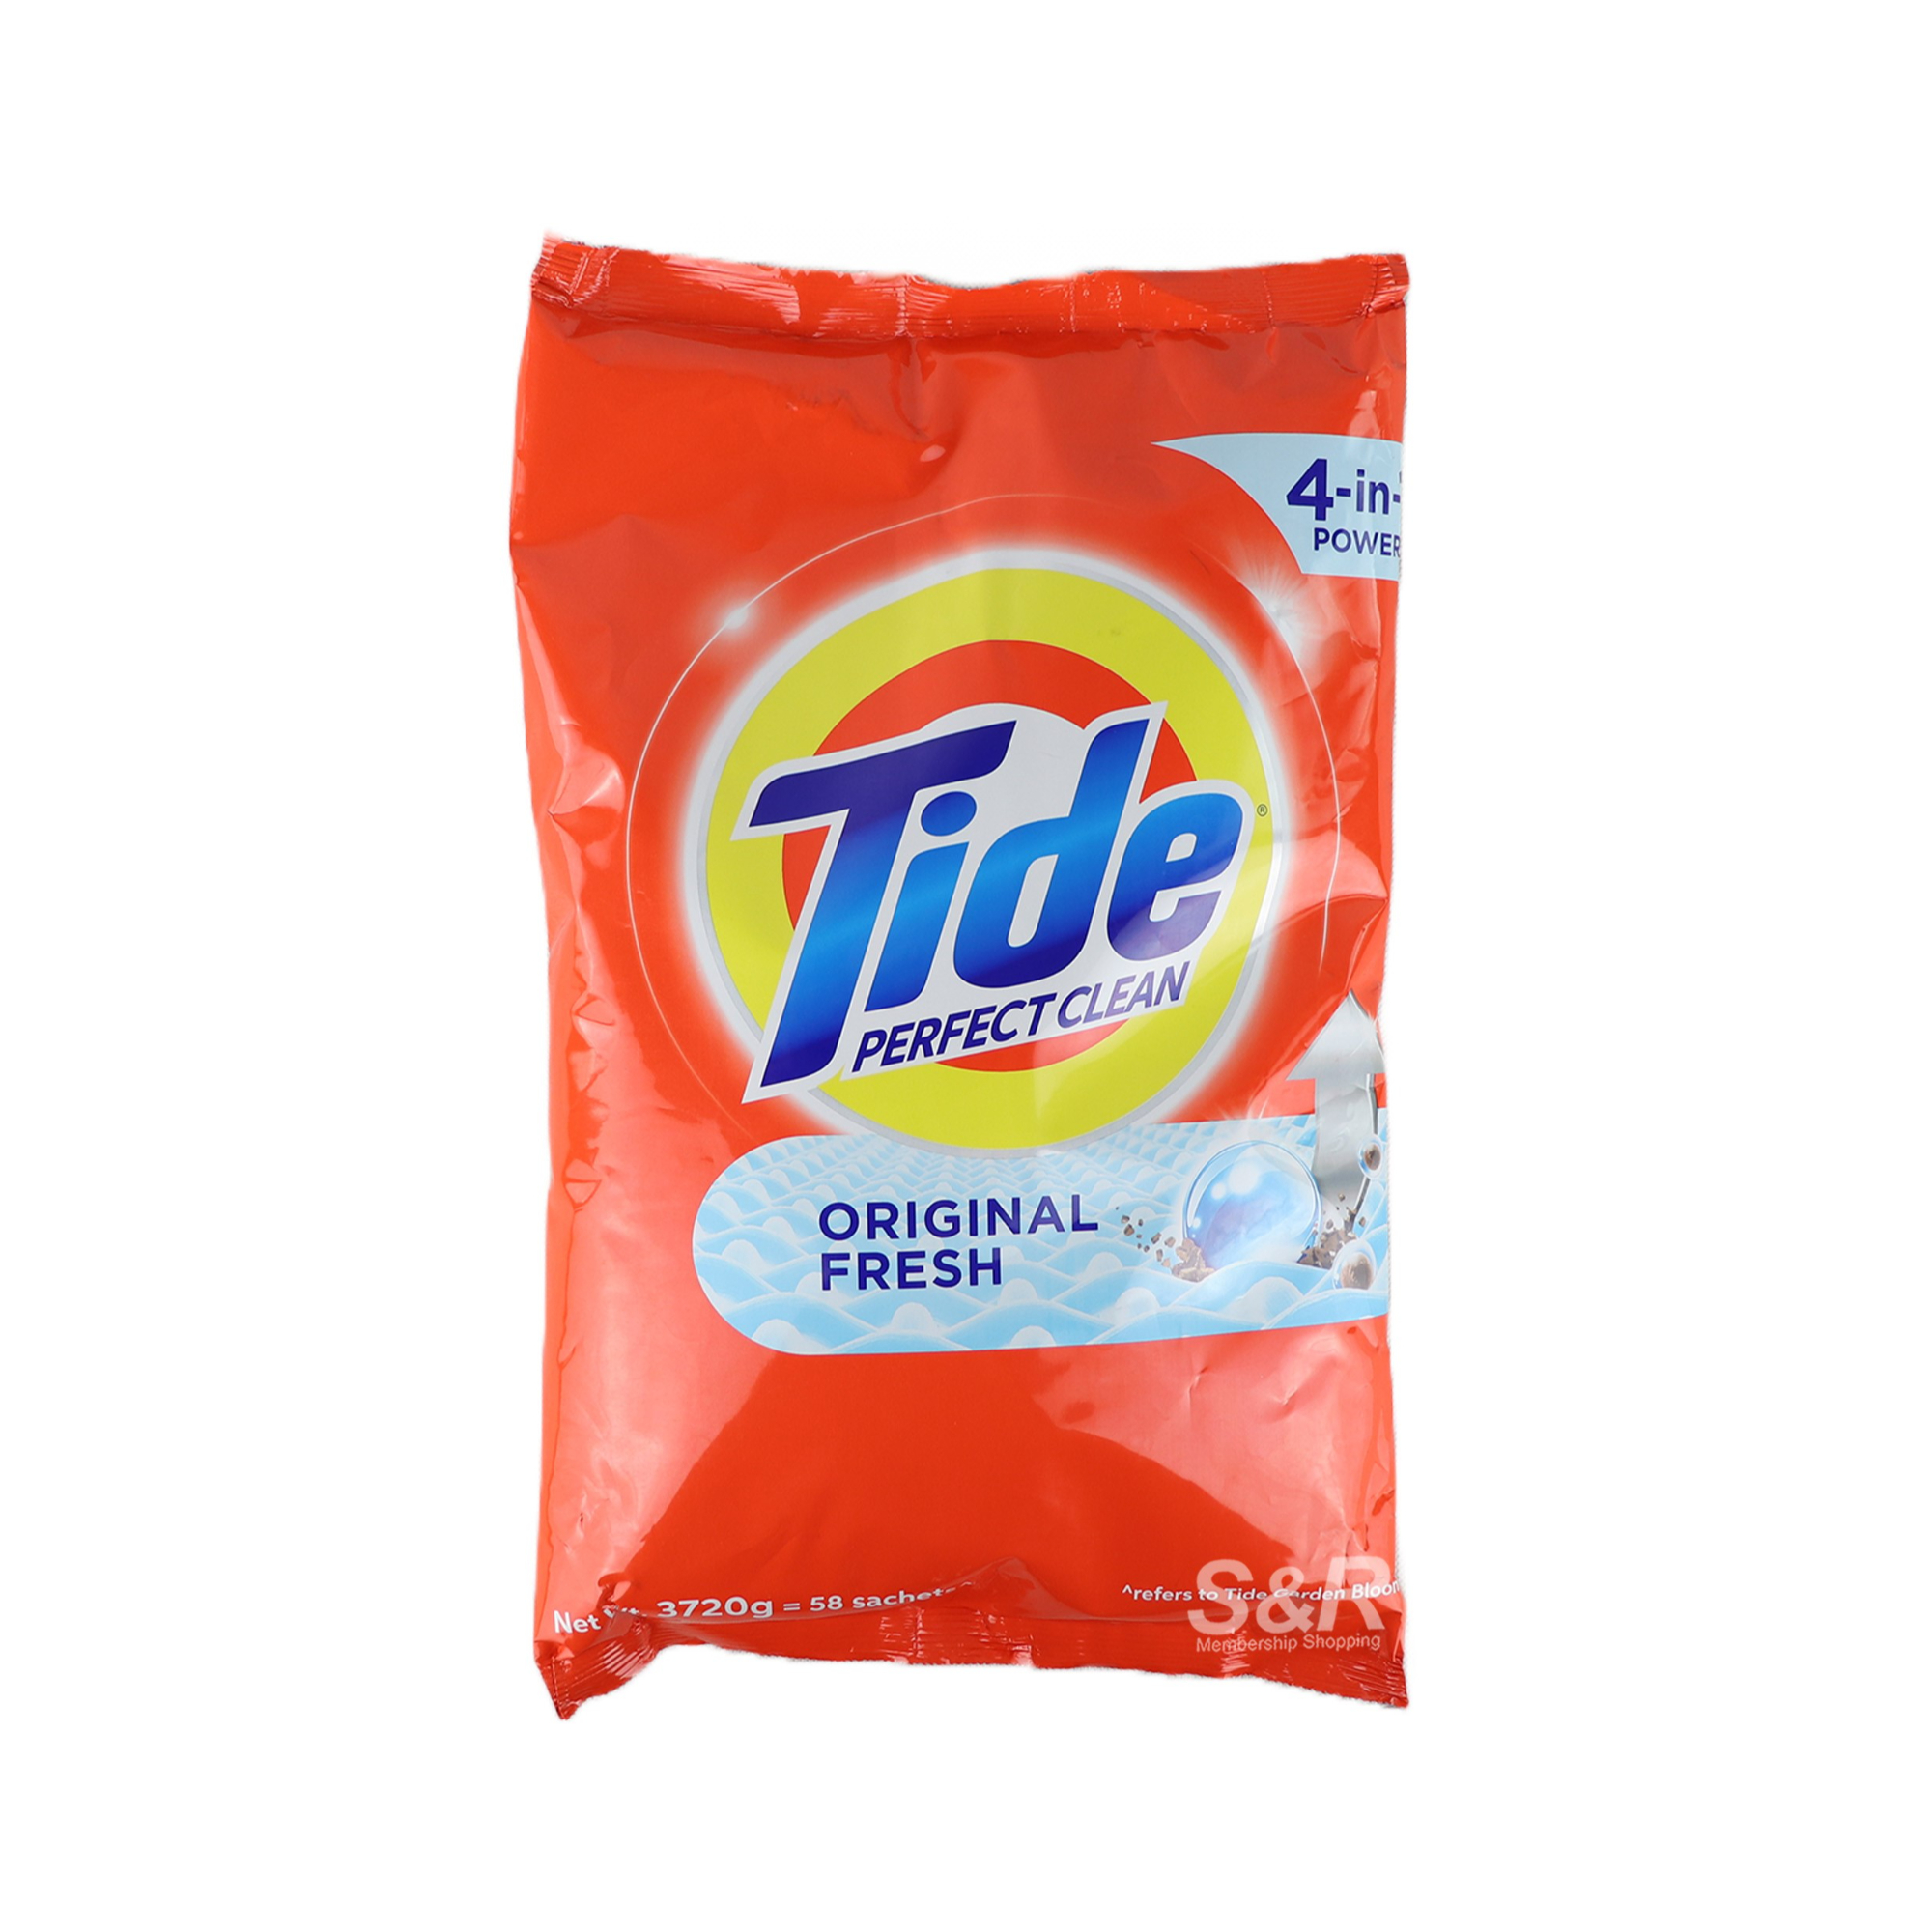 Tide Perfect Clean Original Fresh Laundry Powder Detergent 3.72kg